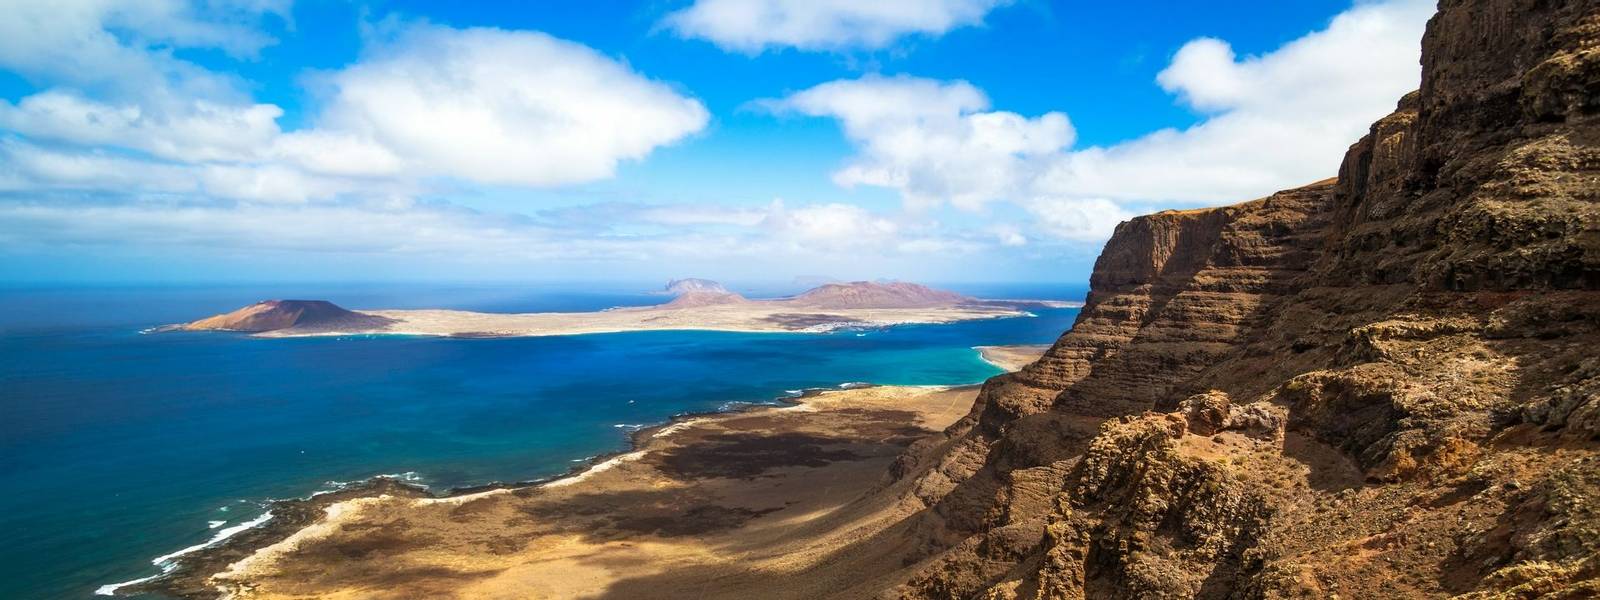 Panorama of the island of La Graciosa, northern of lanzarote, seen from Mirador de Guinate. Canary Islands, Spain.